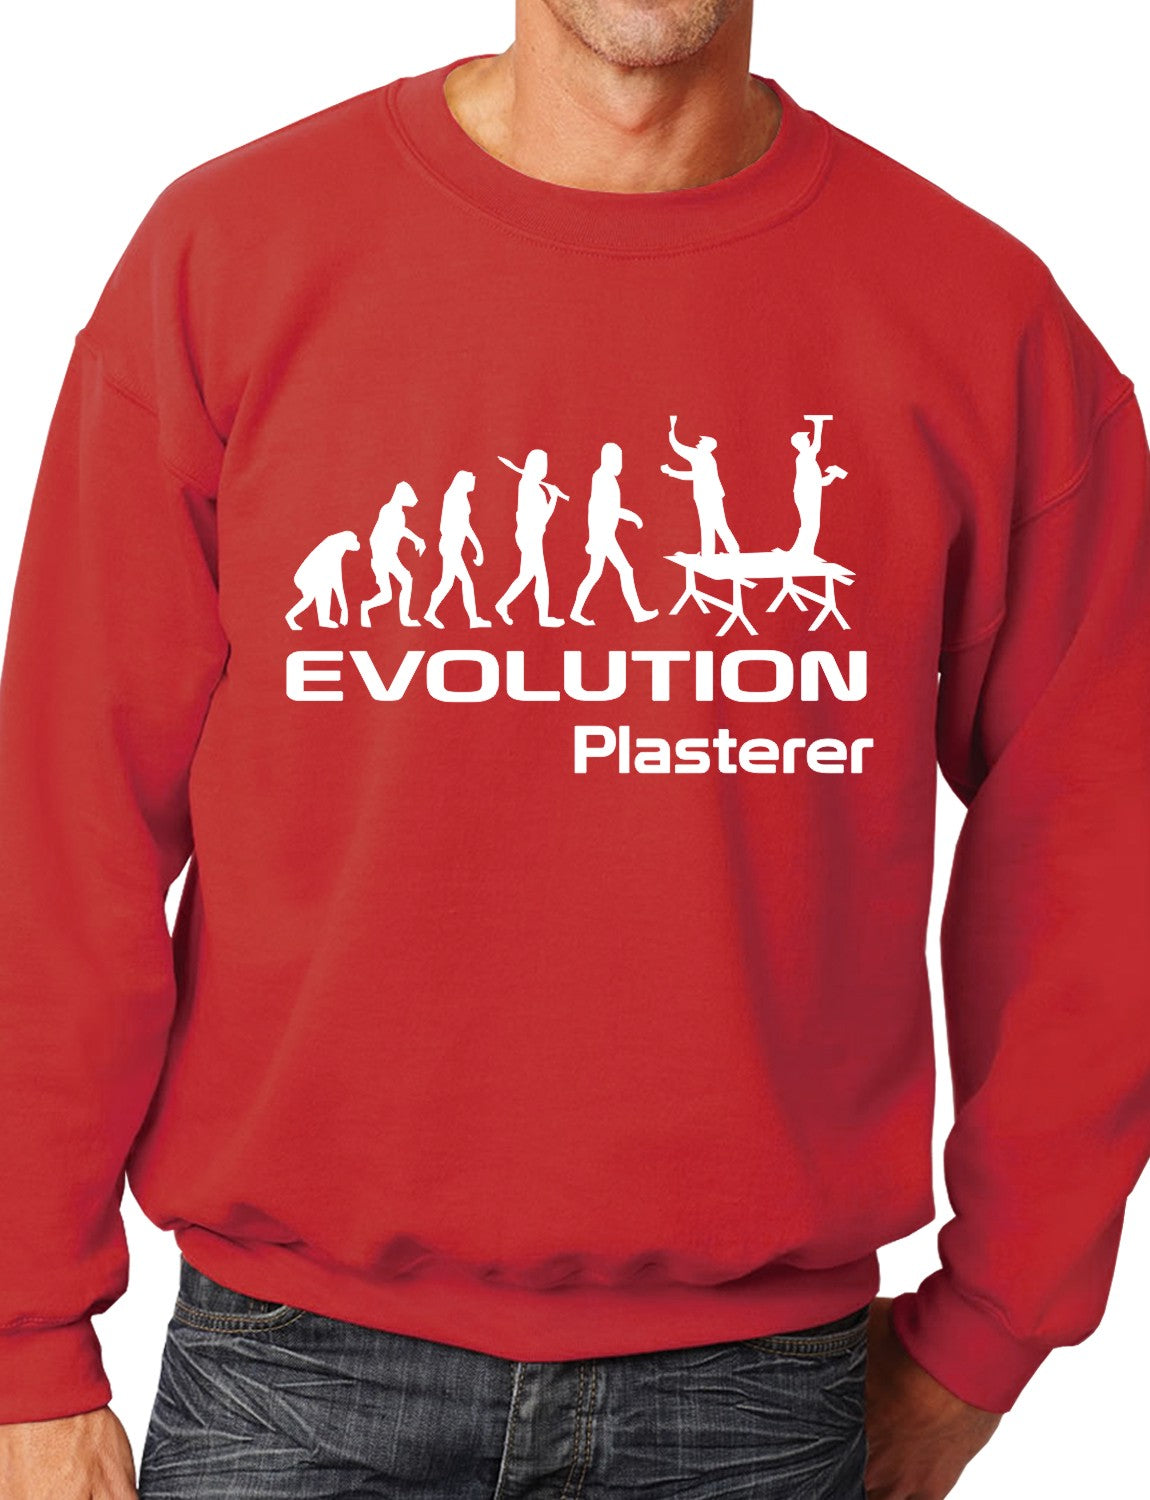 Evolution Of Rock Climbing Funny Adult Unisex Sweatshirt